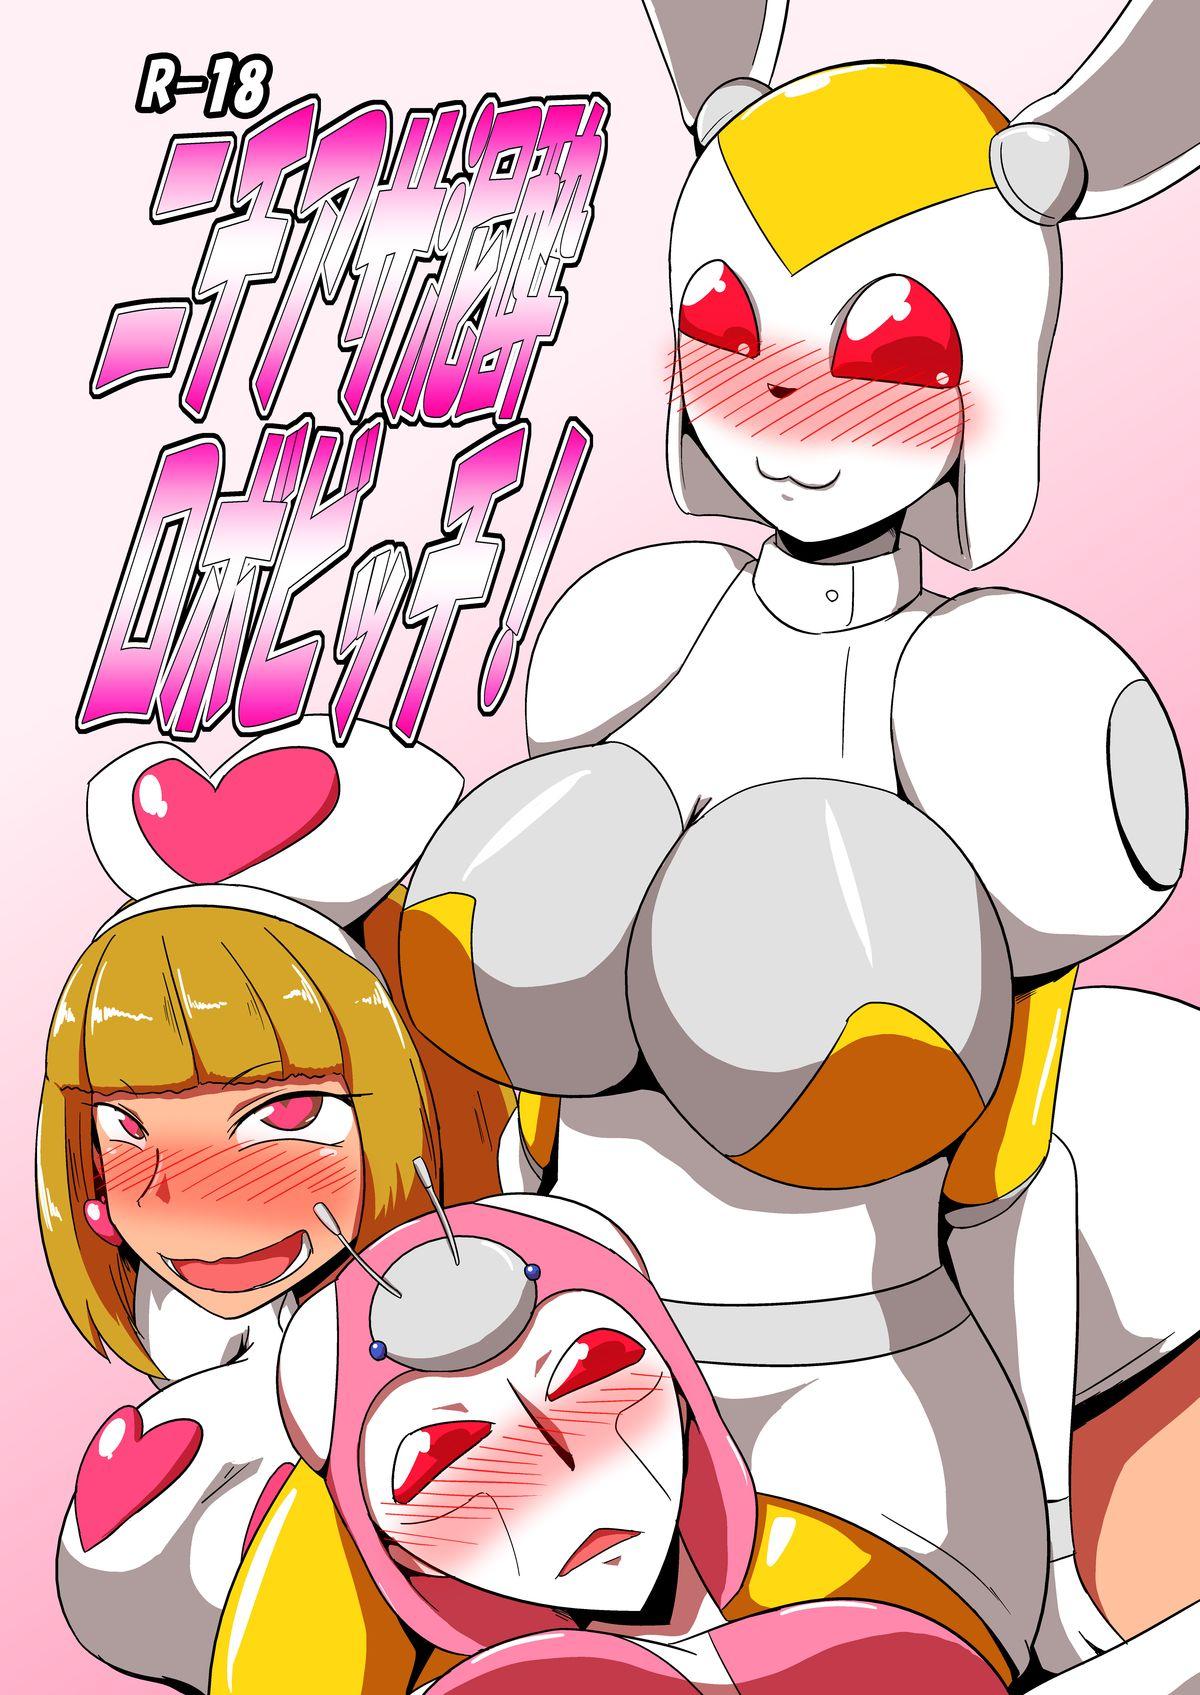 NichiAsa Deisui Robot Bitch! 0